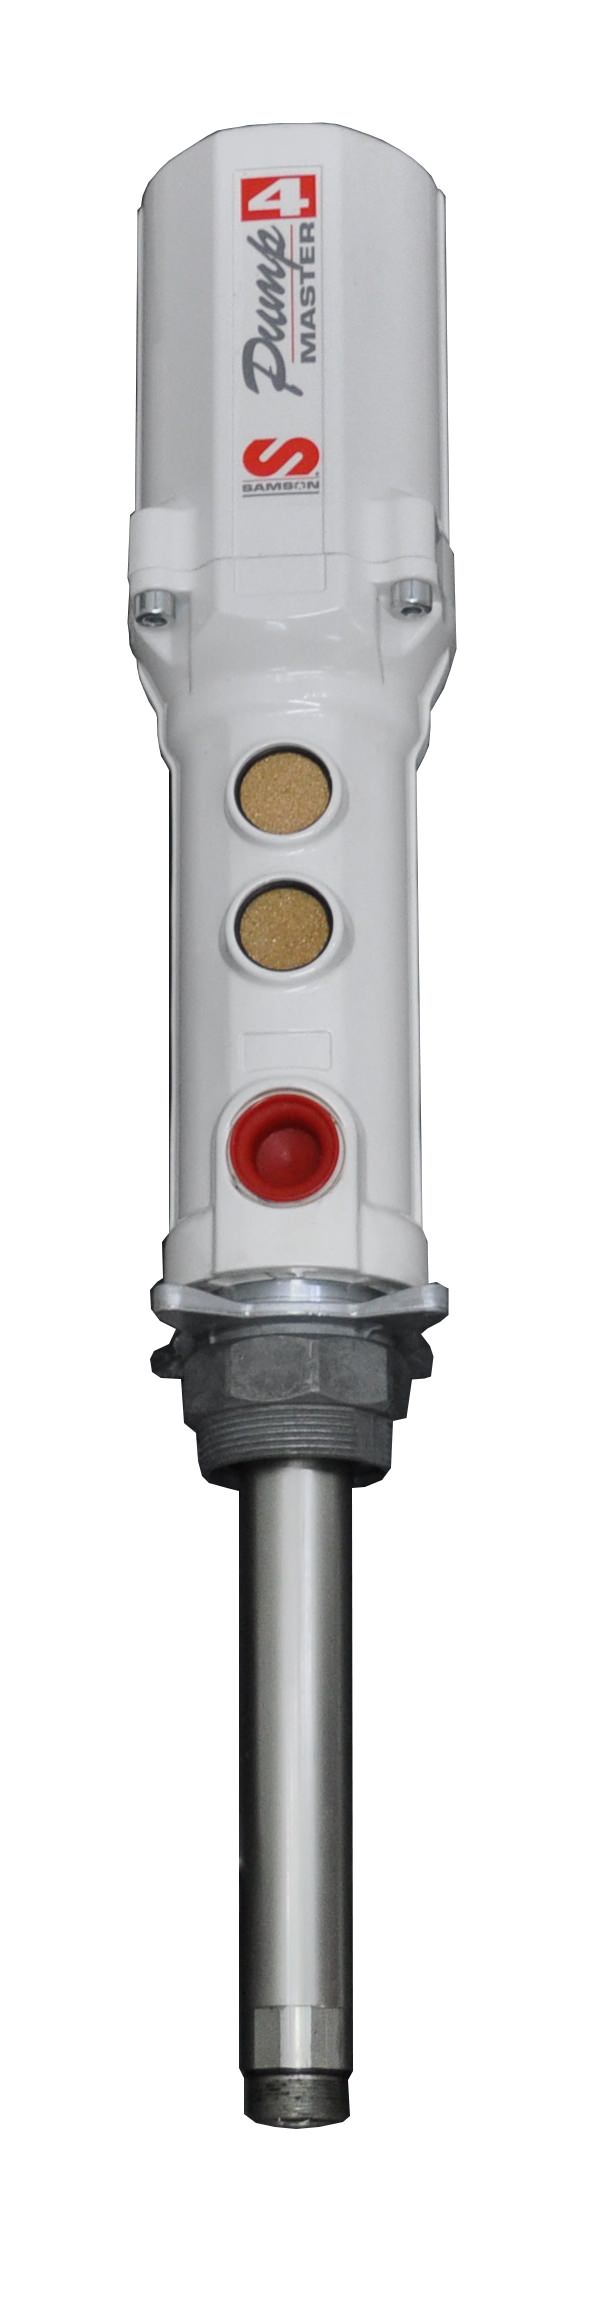 PumpMaster 4 3:1 (55 Gal.) Air Operated Oil Pump Image